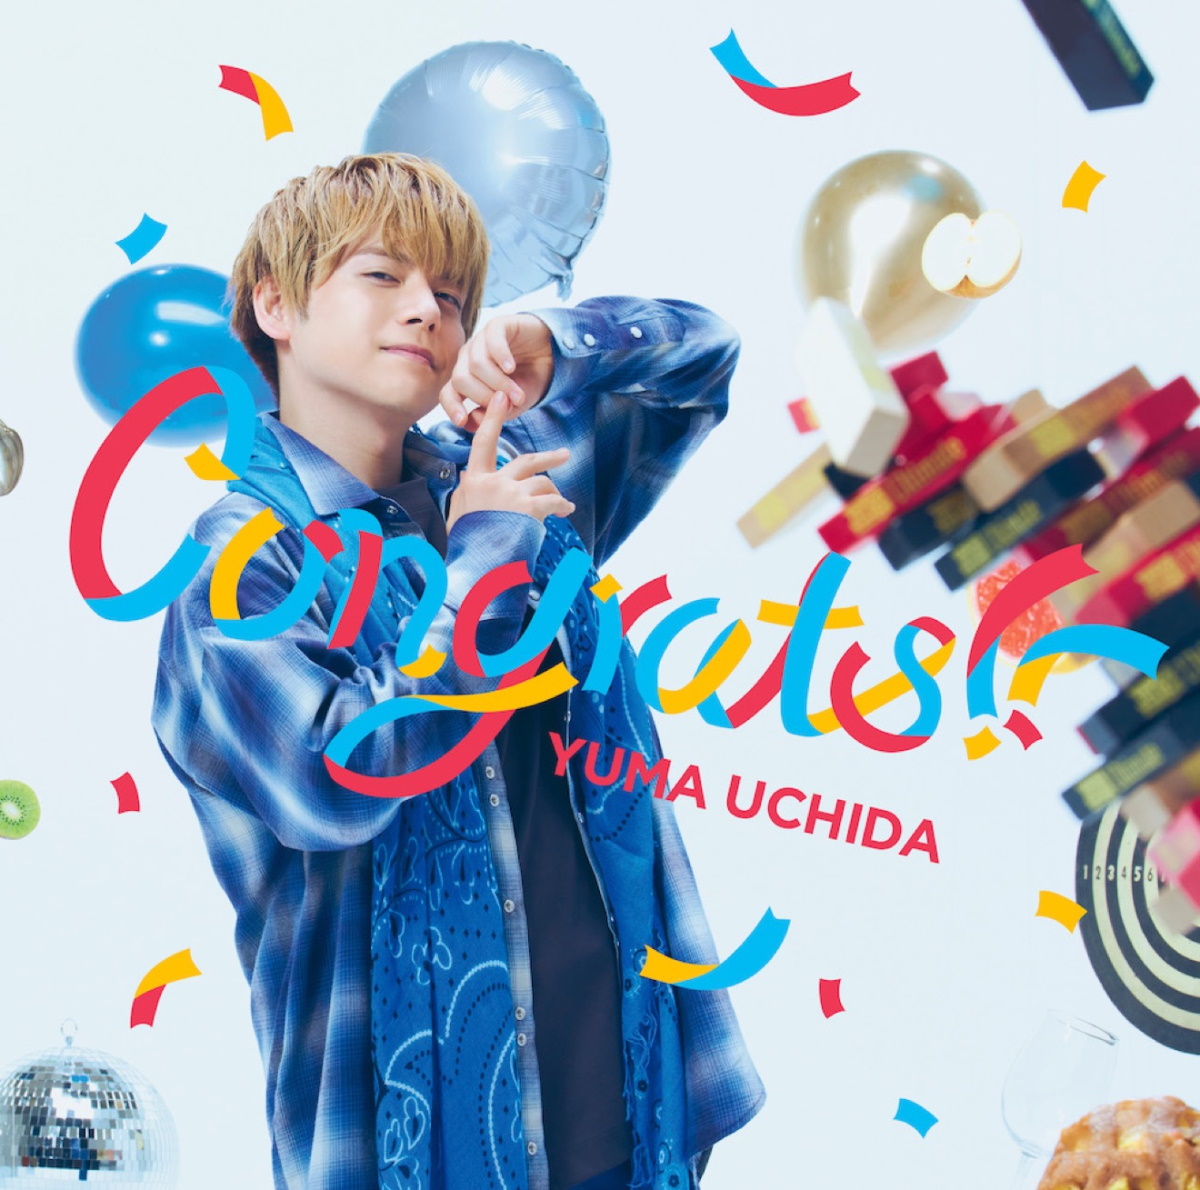 Cover art for『Yuma Uchida - Congrats!!』from the release『Congrats!!